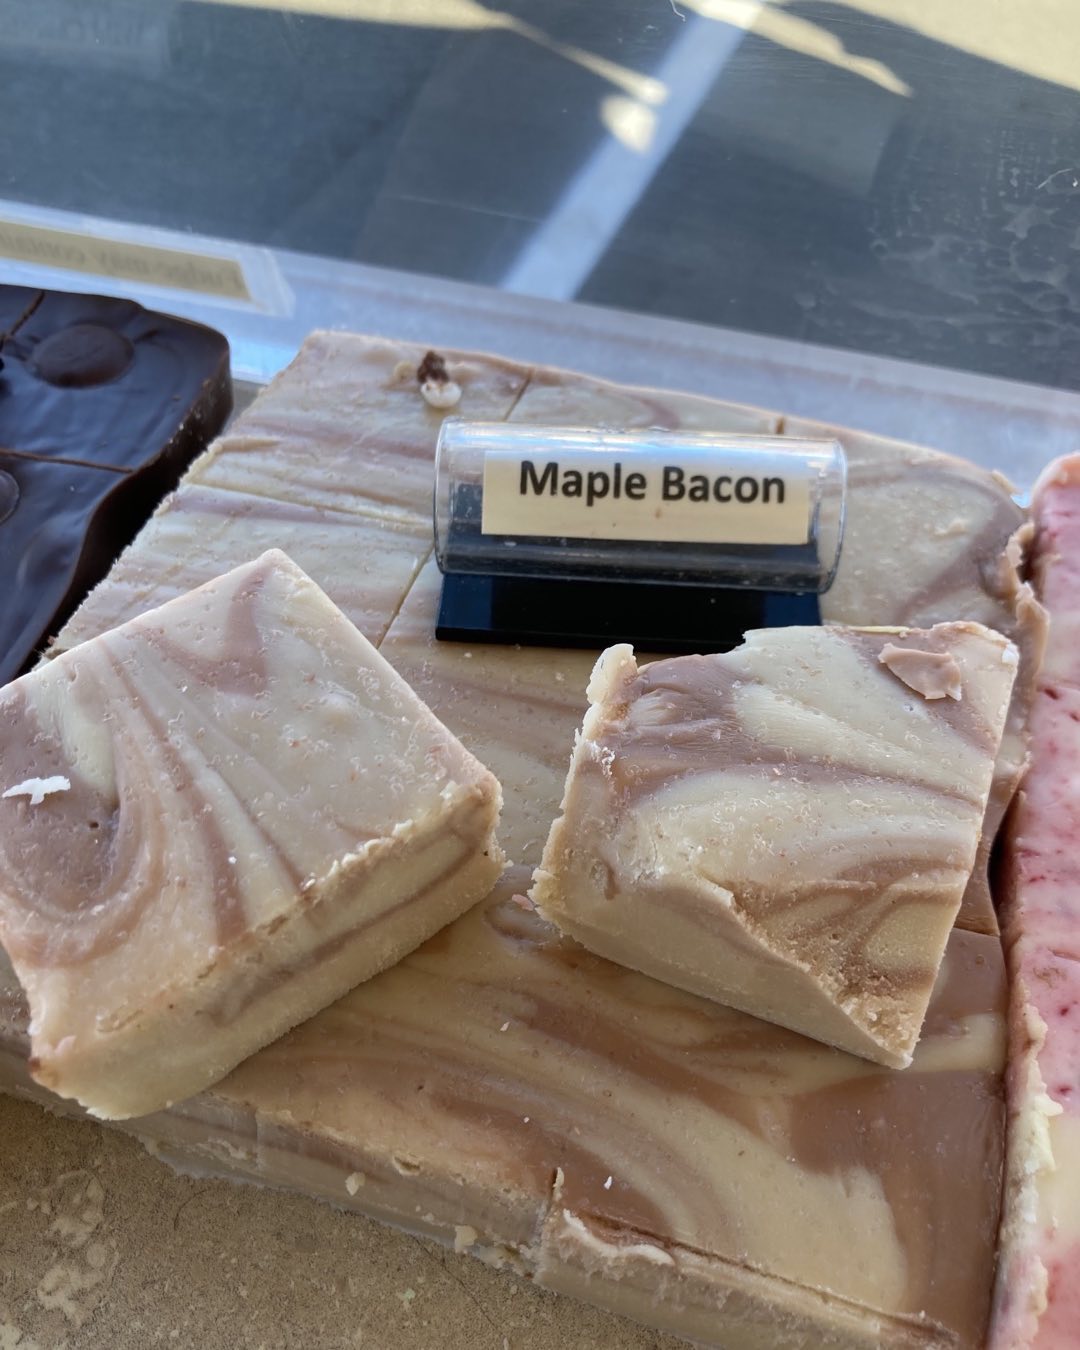 Brand NEW flavour! Maple Bacon!
It’s crazy! #beaverhousefudge #freshfudge #sidneystreetmarket